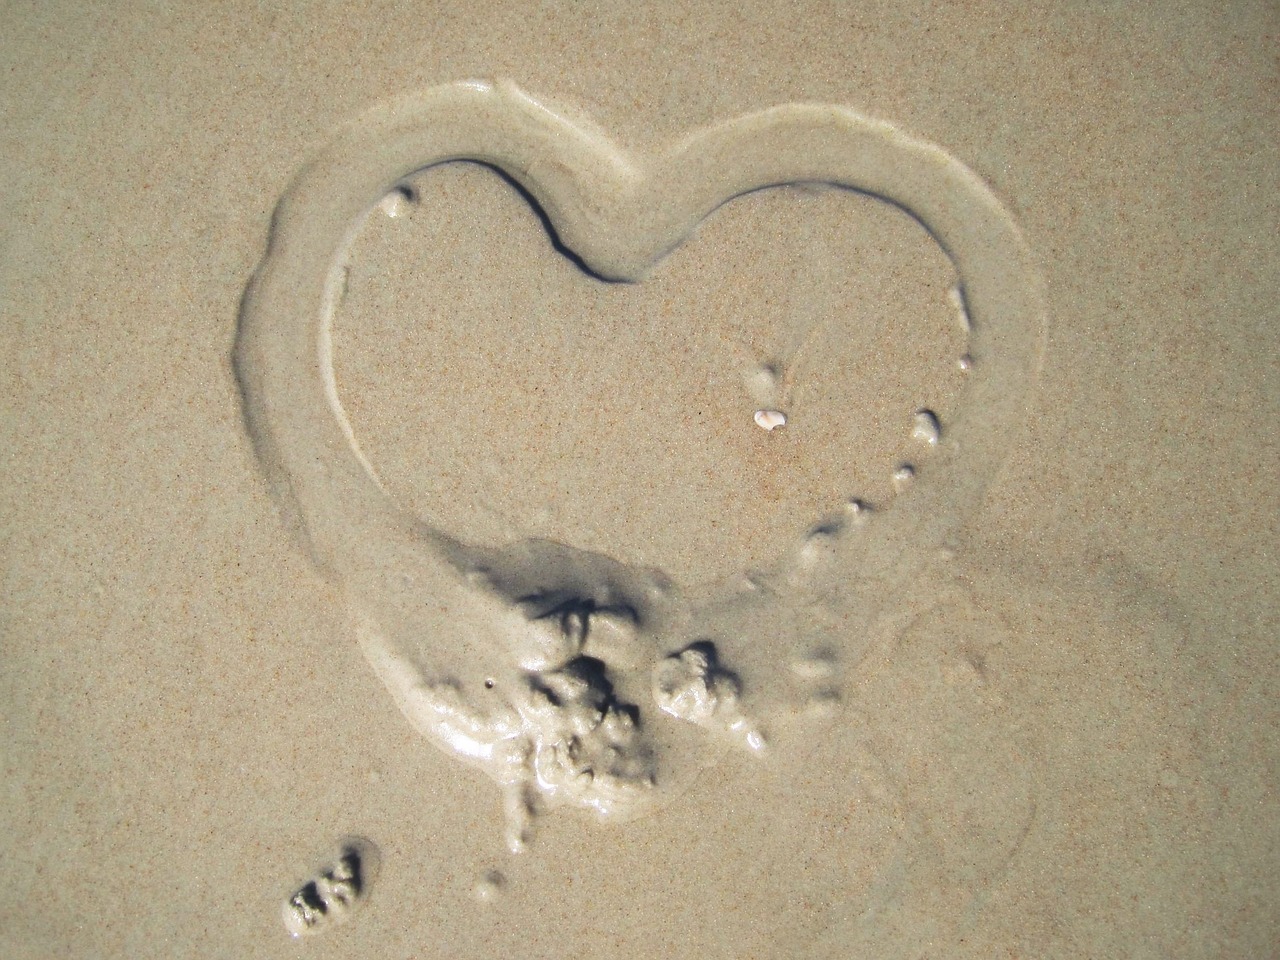 heart in sand i love you heart free photo